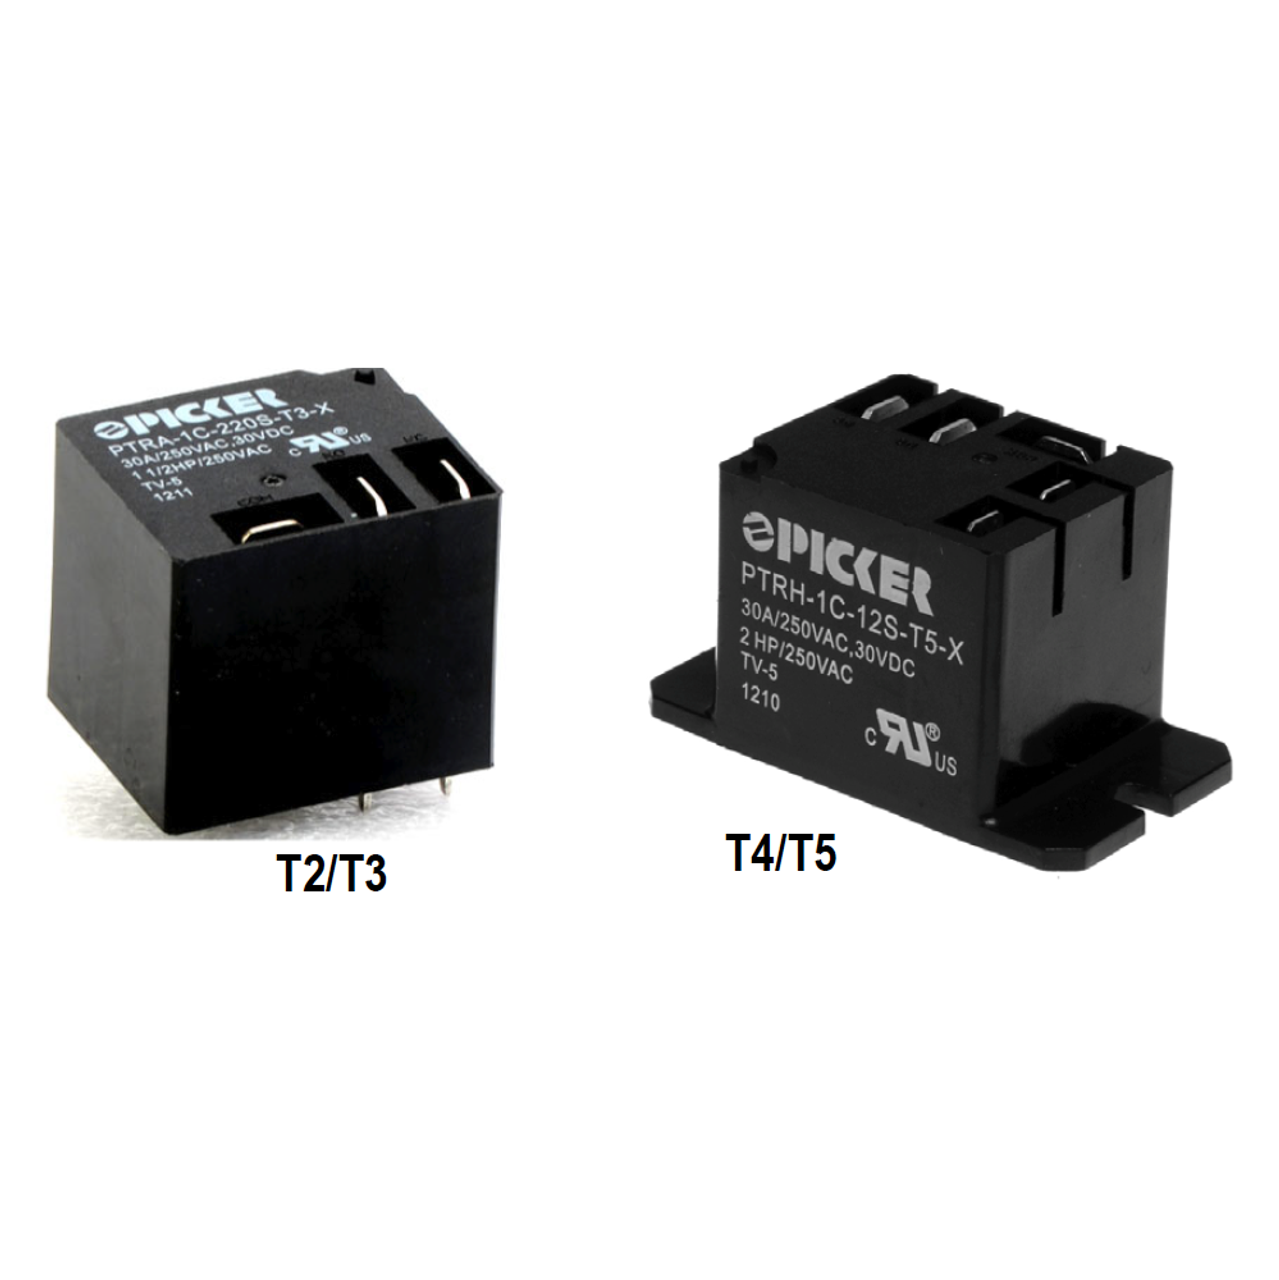 Picker PTRH-1C-110SFT-T4-X670.6G Power Relays